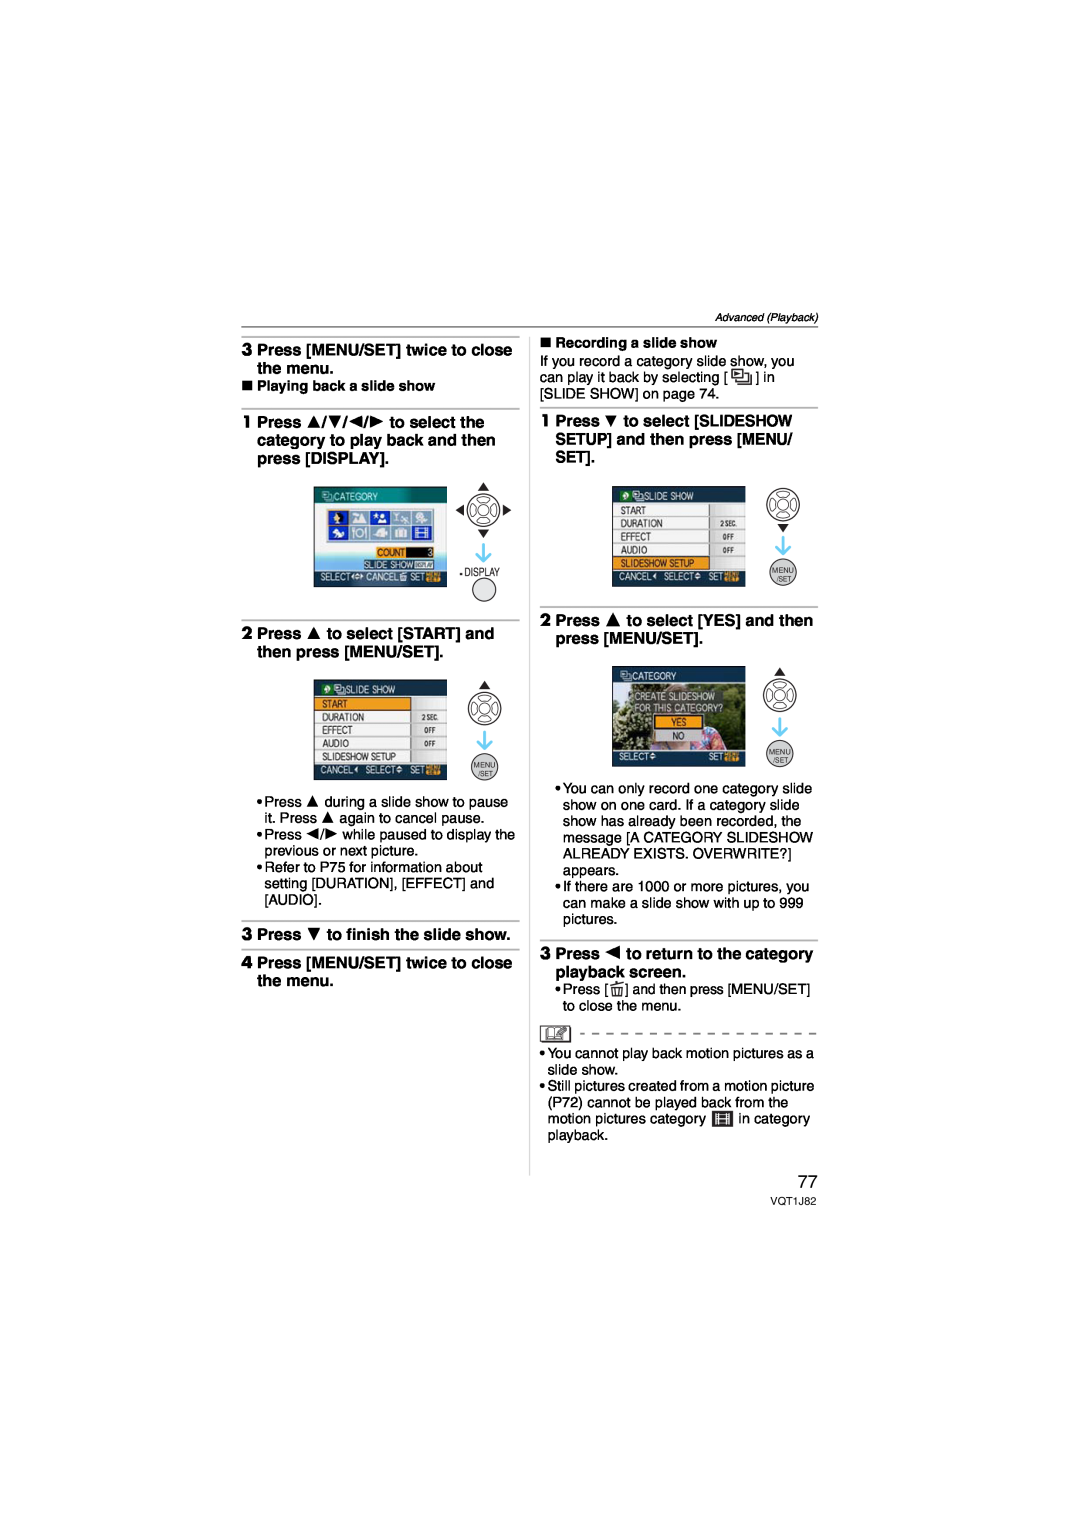 Panasonic DMC-FX33 operating instructions Press MENU/SET twice to close the menu, Press 4 to finish the slide show 